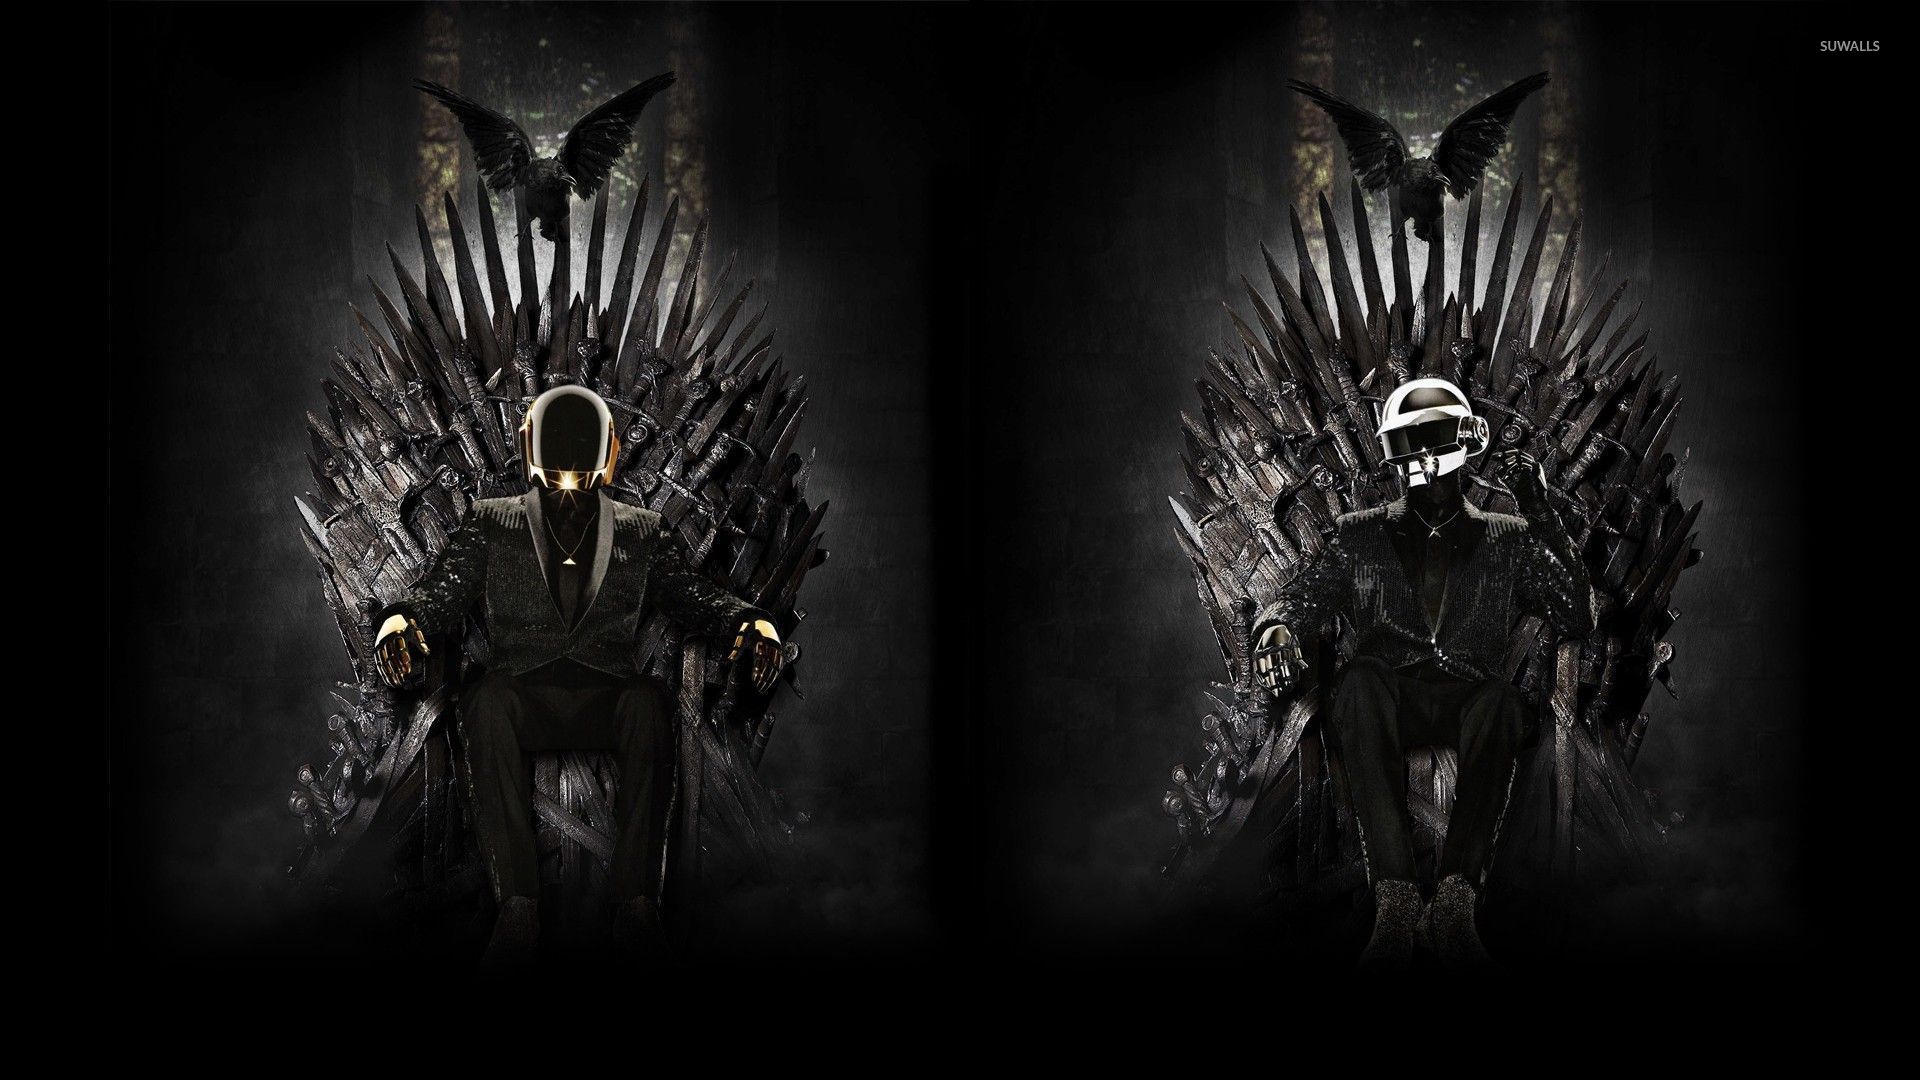 Daft Punk On The Iron Throne Wallpaper Music